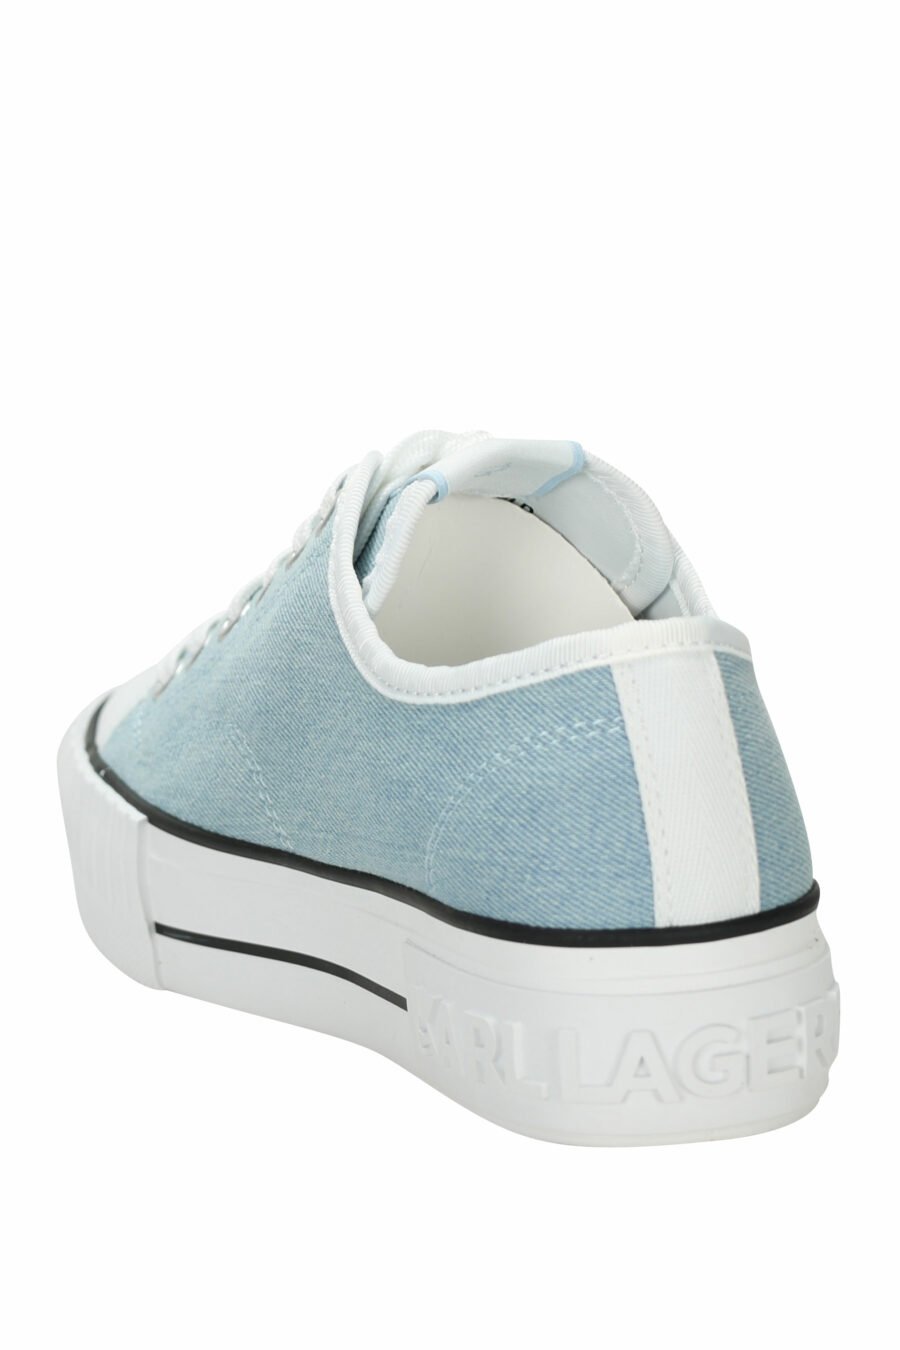 Baskets de style "converse" bleu clair avec mini-logo en caoutchouc "karl" - 5059529384691 3